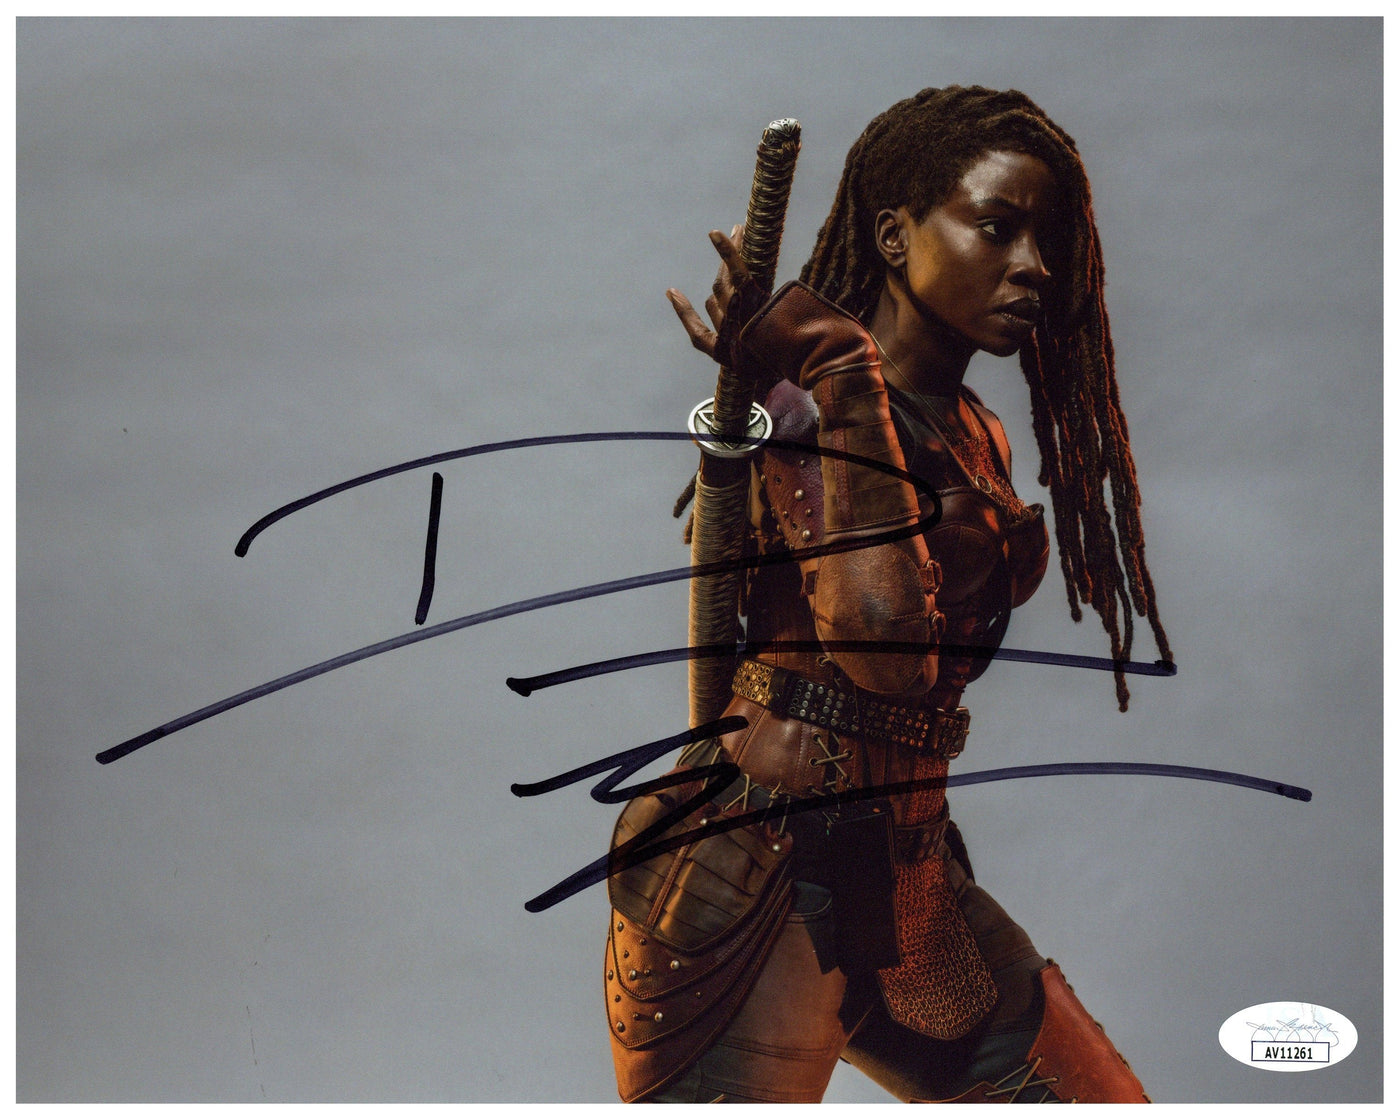 Danai Gurira Signed 8x10 Photo The Walking Dead Michonne Autographed JSA COA #6